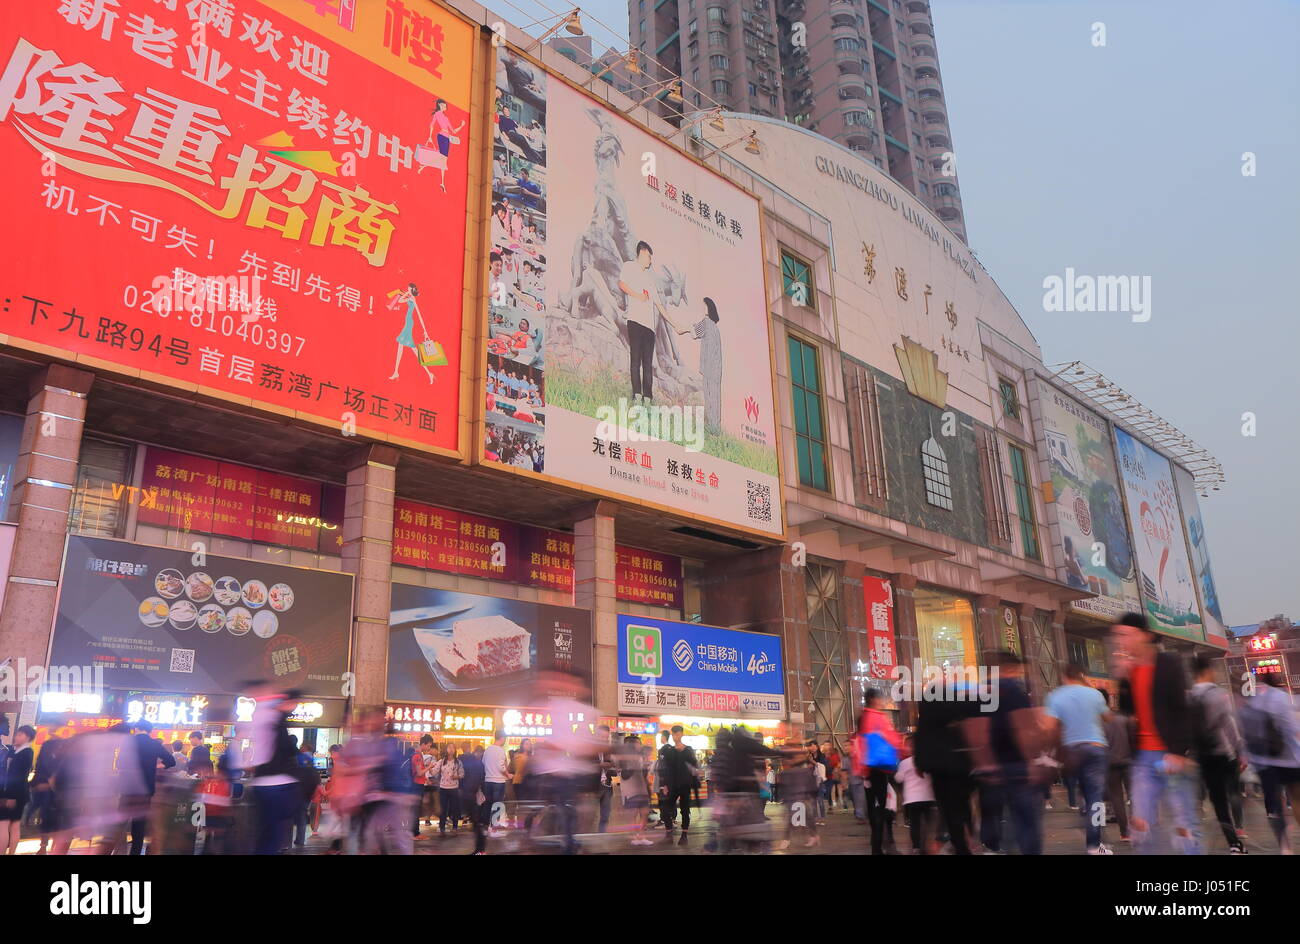 Personnes visitent Liwan Plaza rue piétonne Shangxiajiu Guangzhou en Chine. Le premier est de Shangxiajiu street à Guangzhou a ouvert en 1999 Banque D'Images